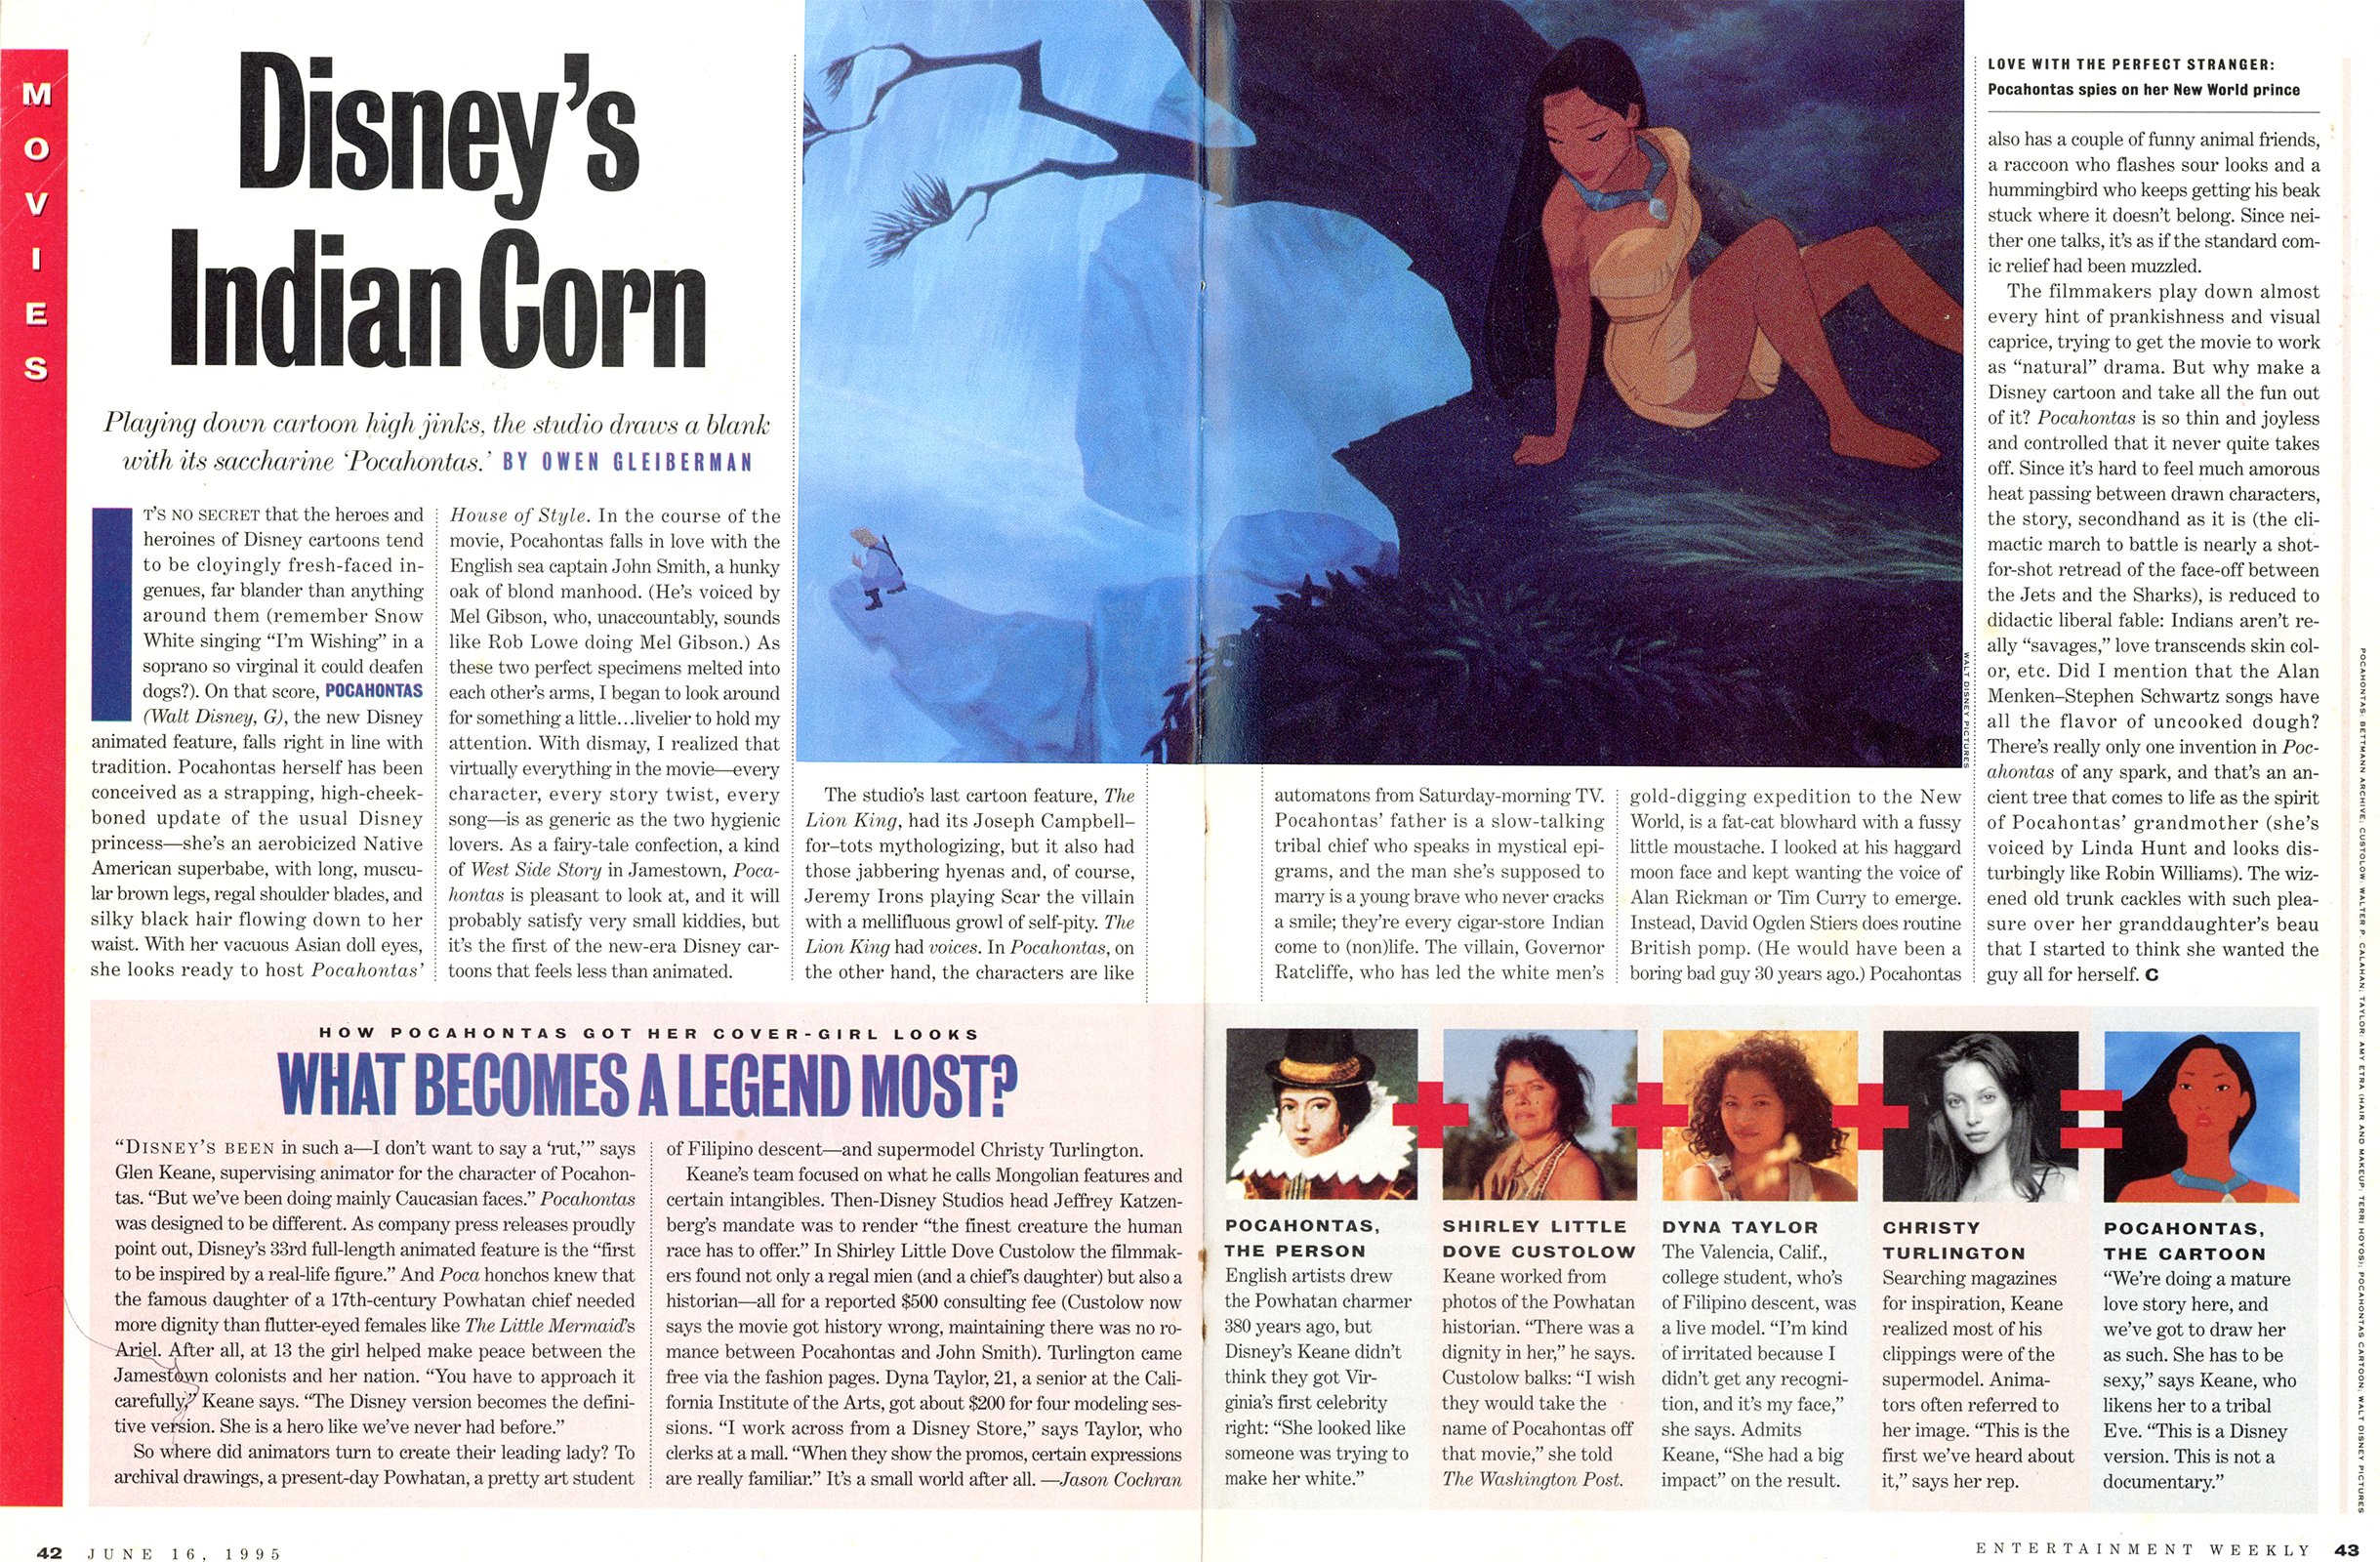 Entertainment Weekly - June 1995